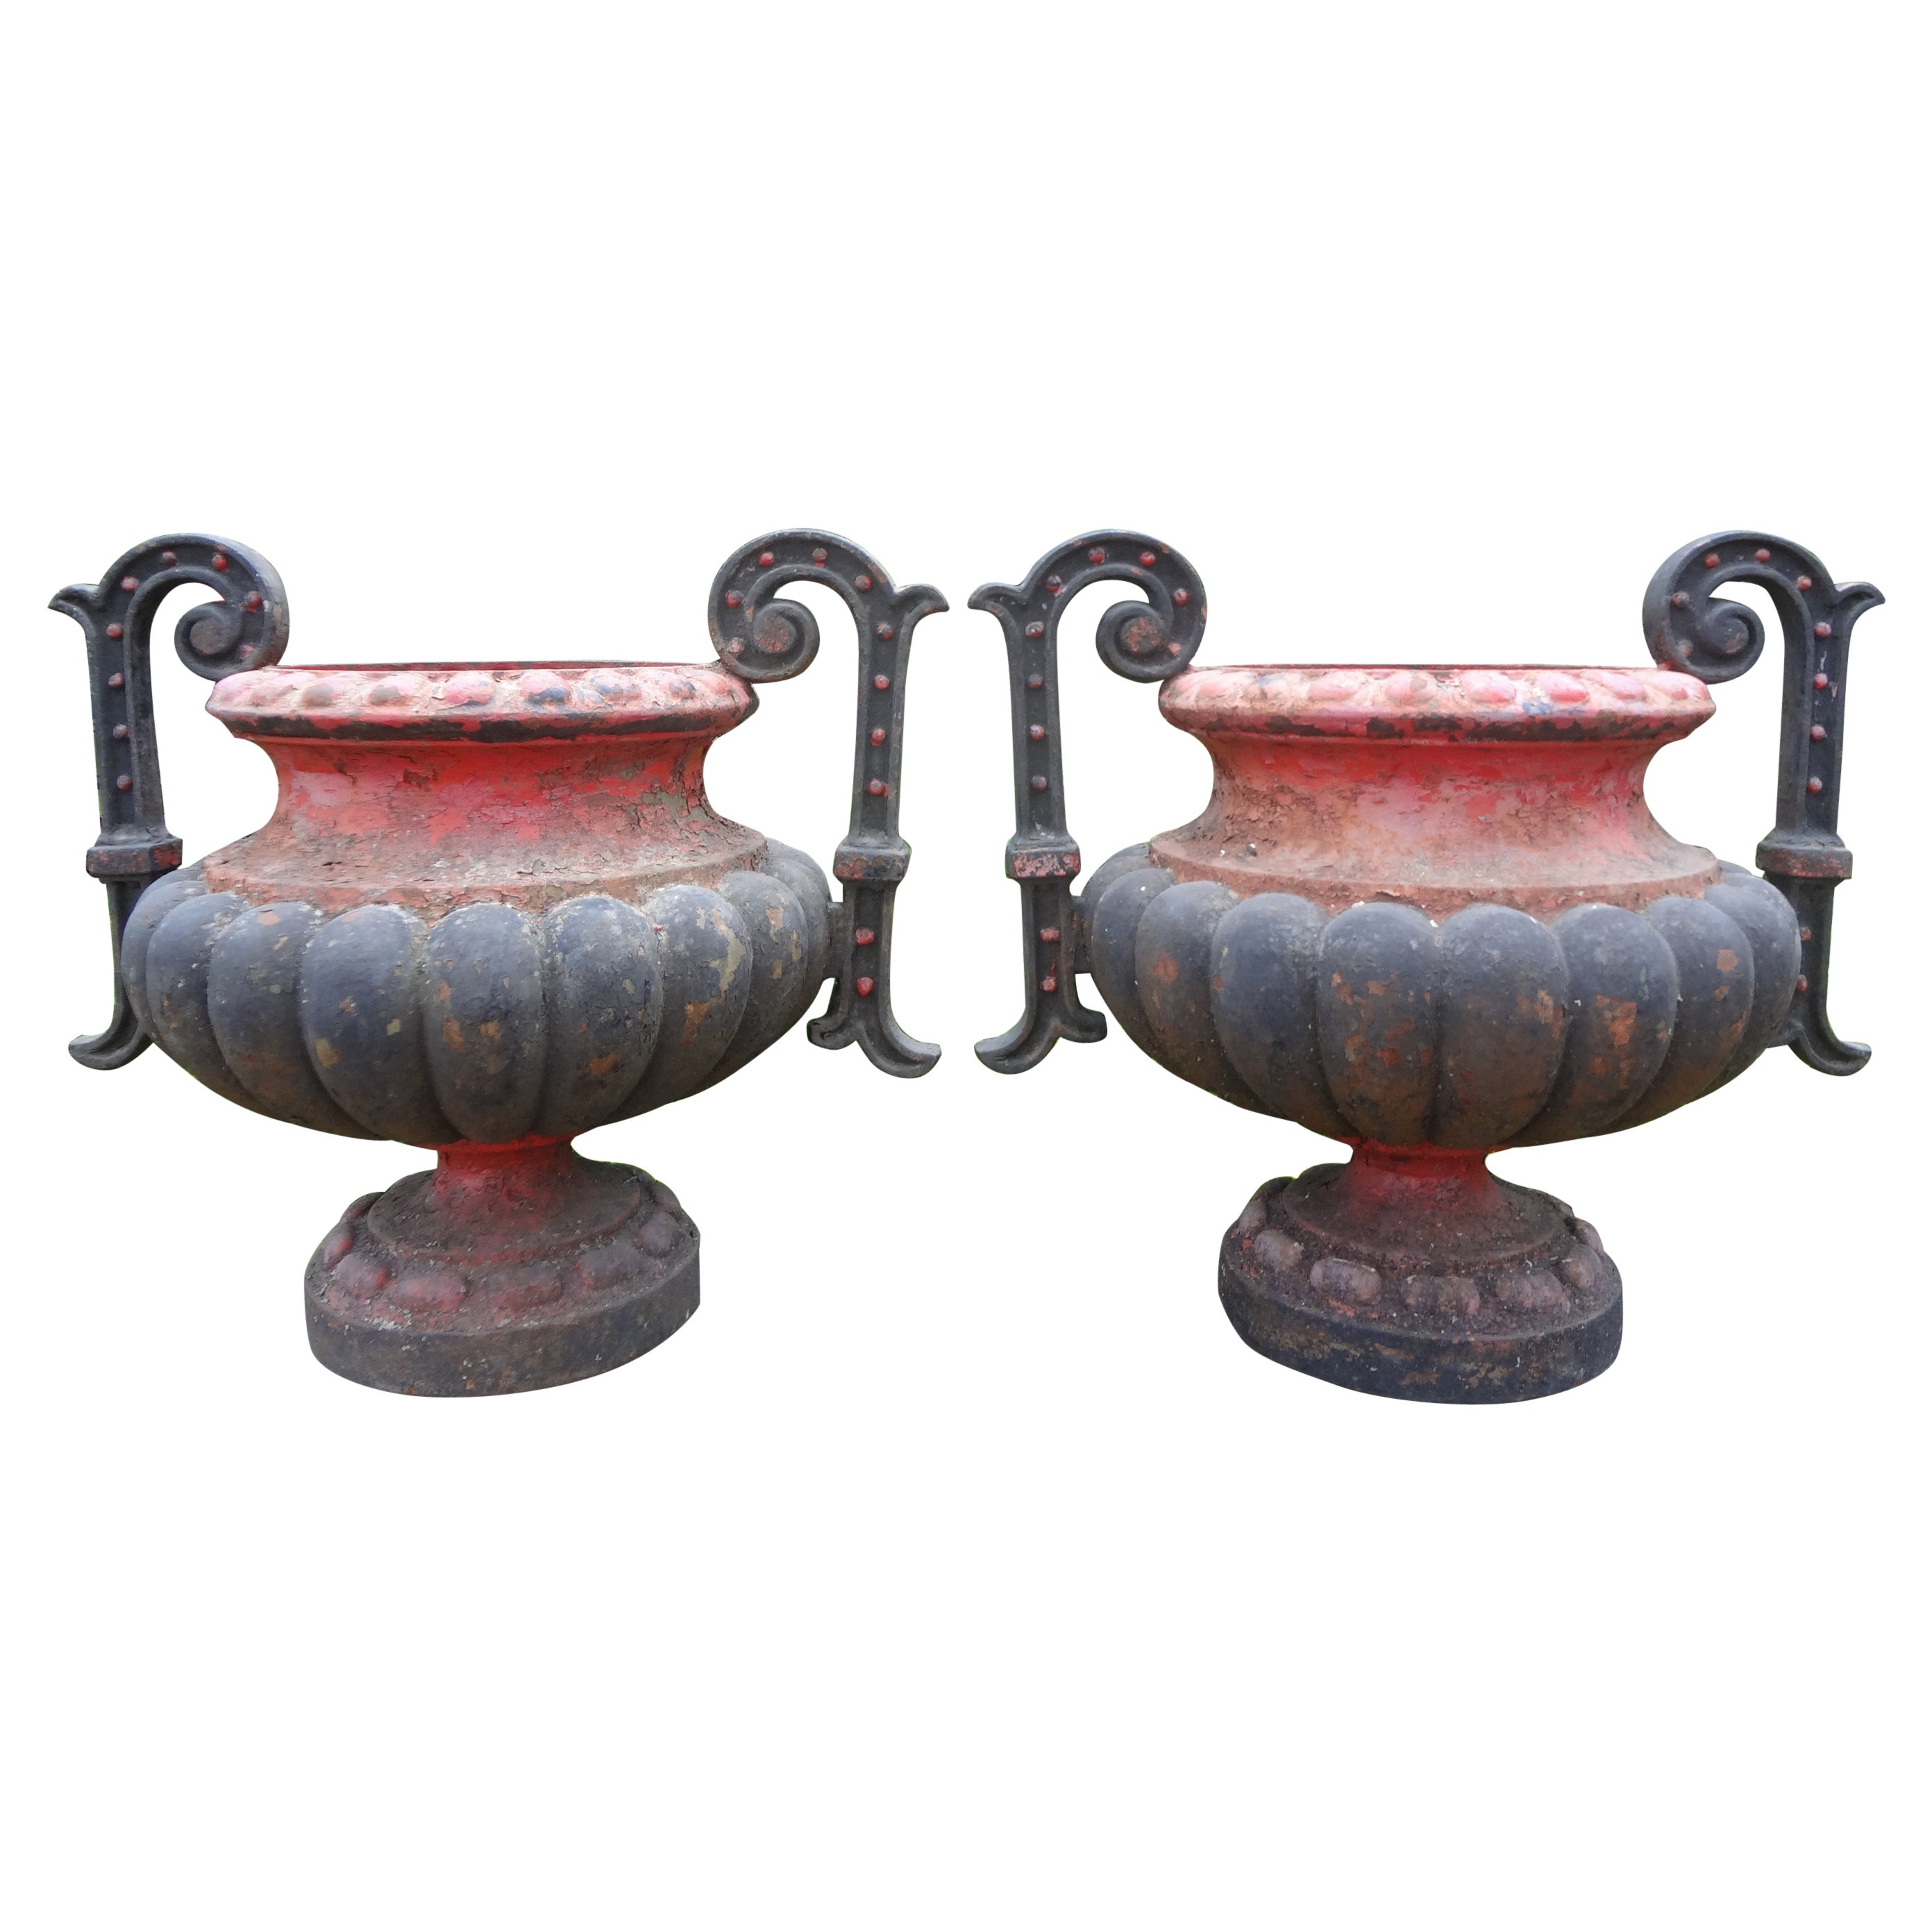 Pair of 19th Century French Iron Garden Urns